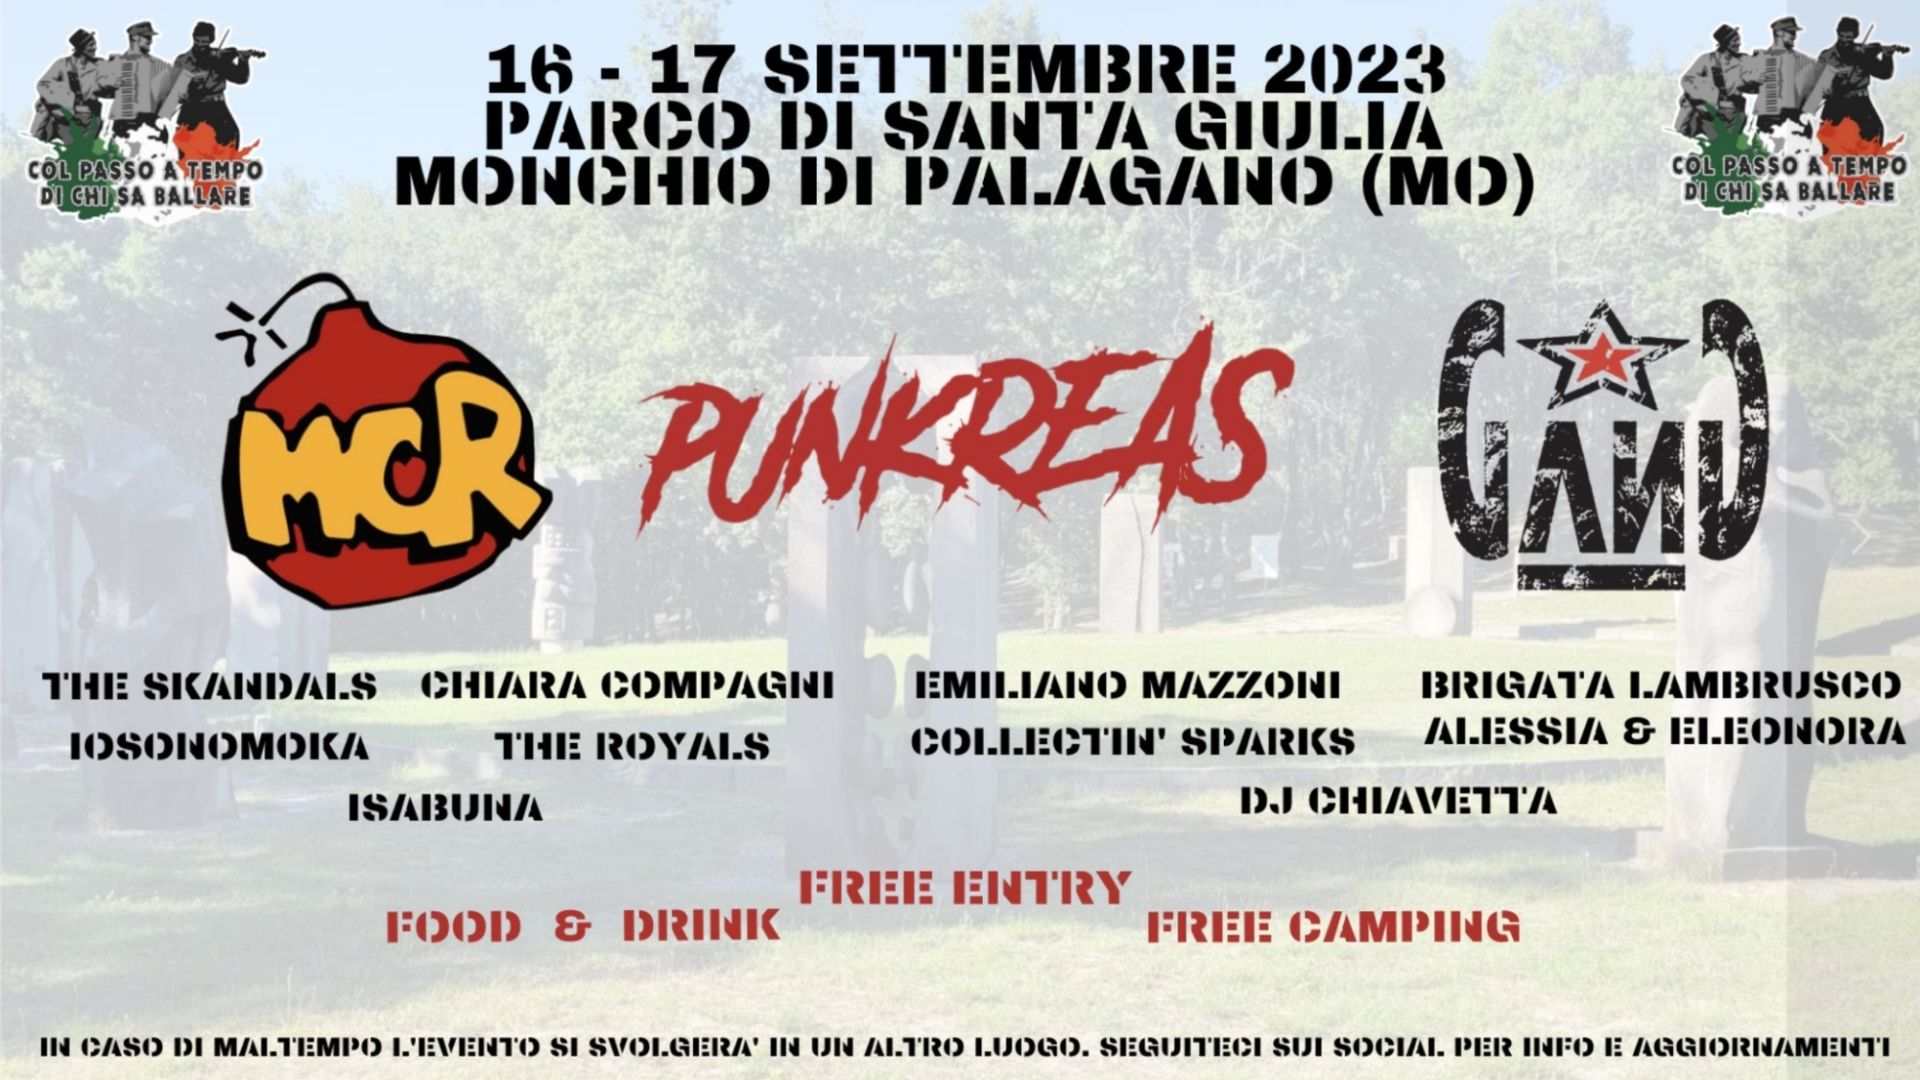 Col Passo A Tempo Di Chi Sa Ballare - Punkreas + Modena City Ramblers + Gang